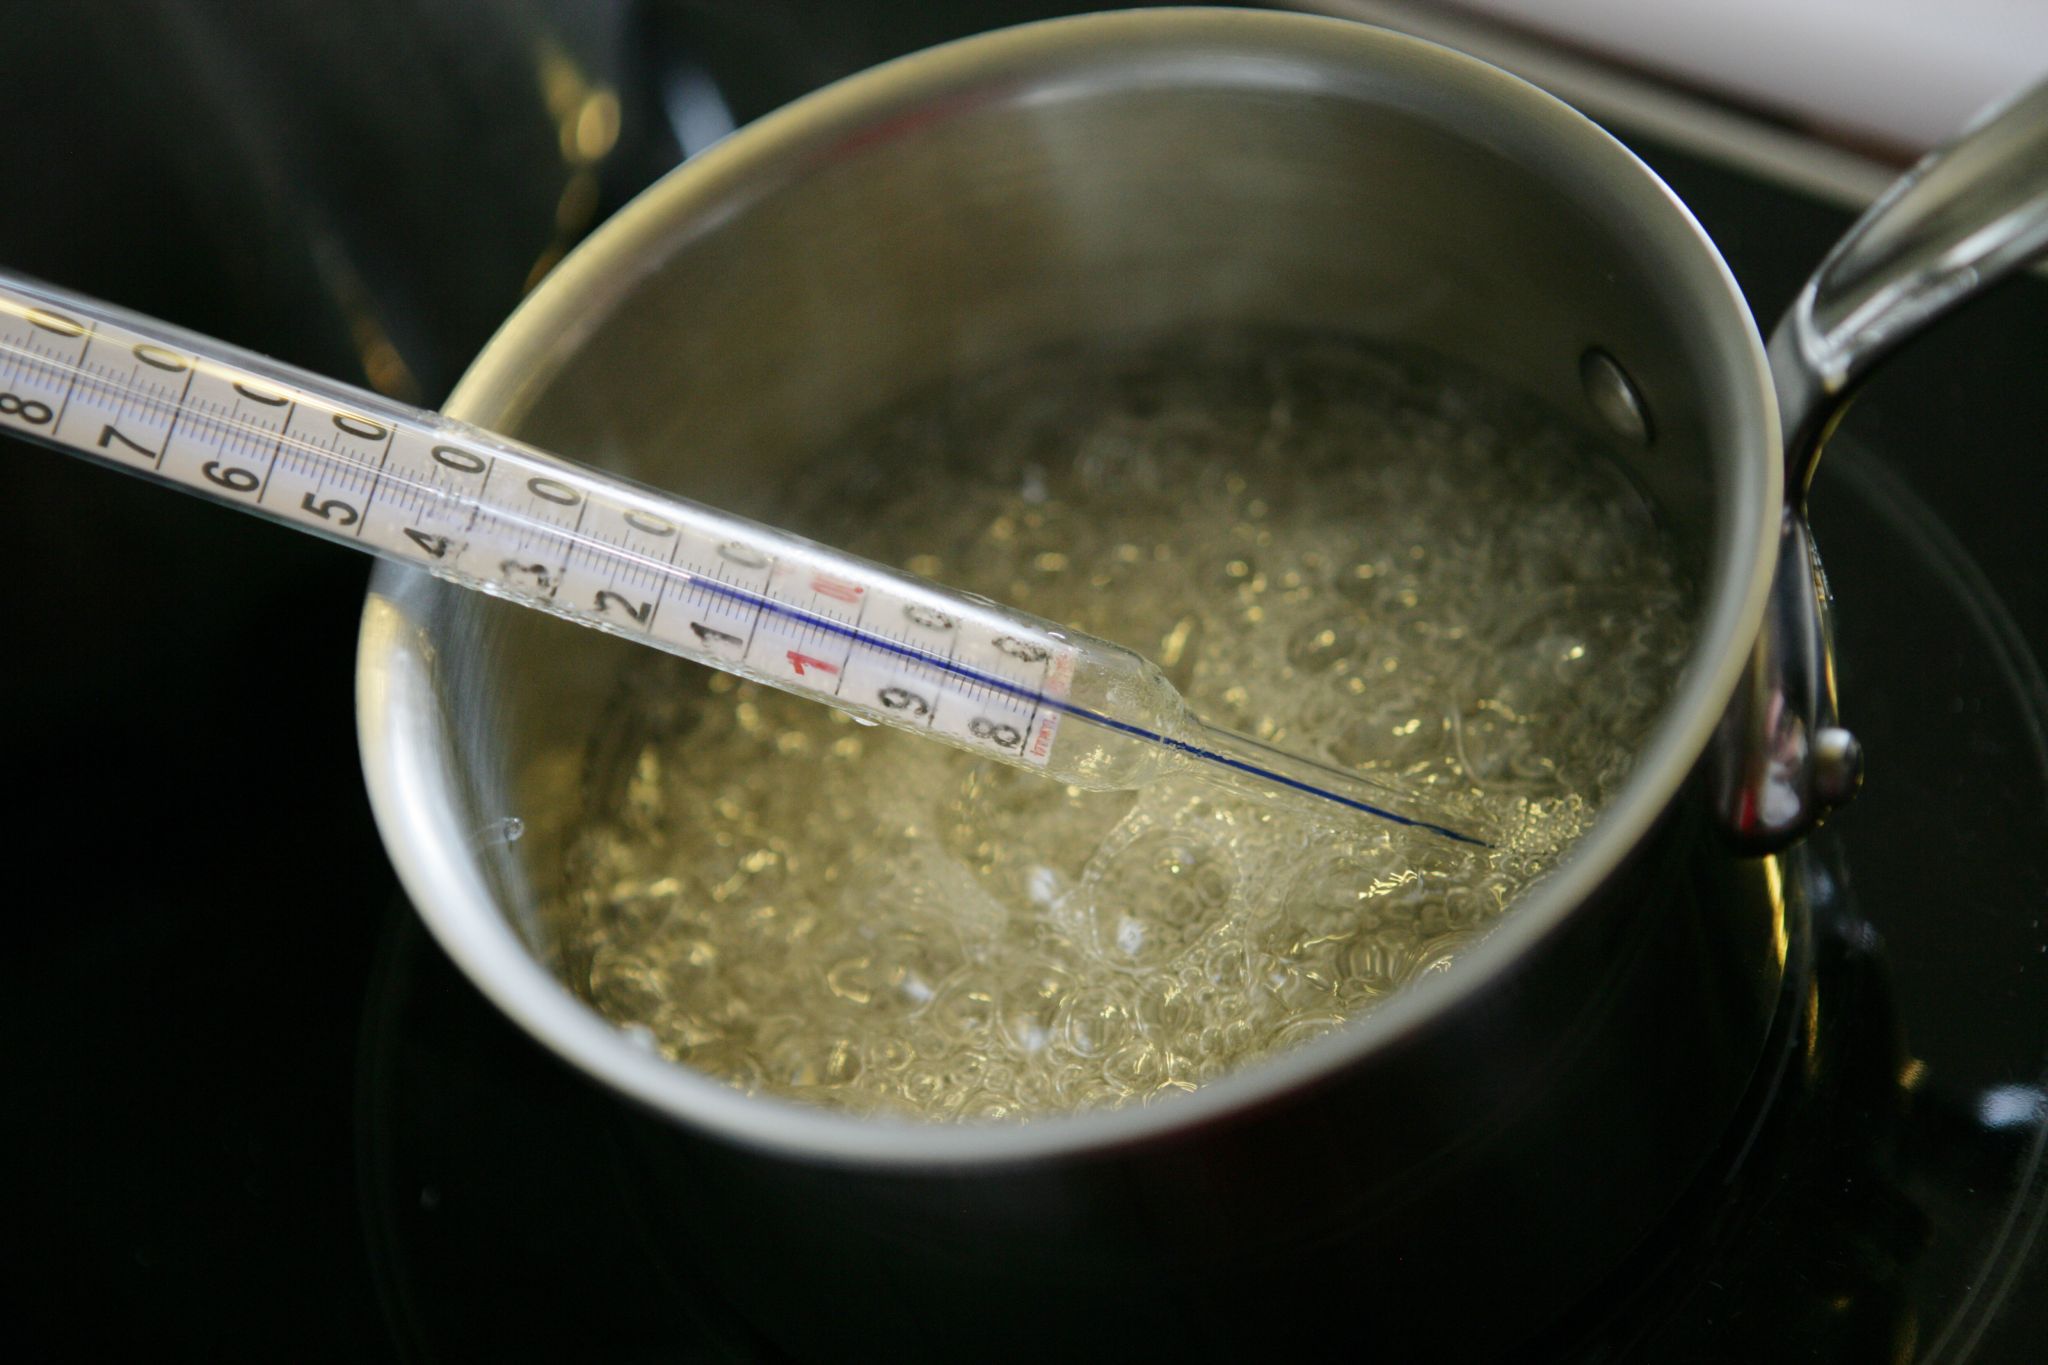 un thermomètre mesurant la température d’un liquide bouillonnant